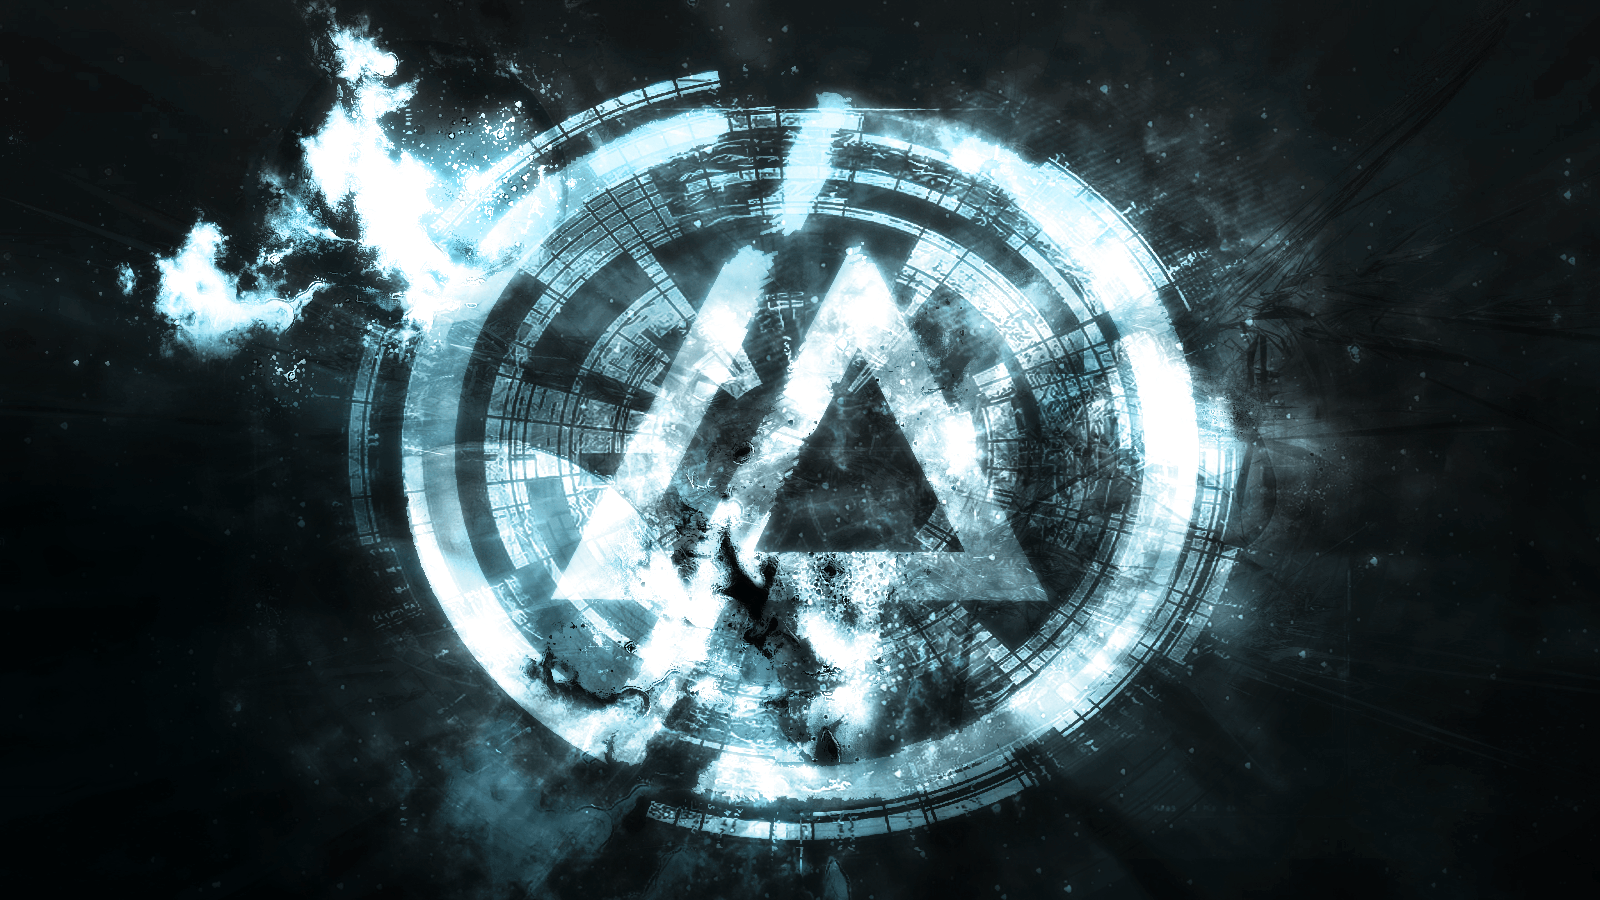 Linkin Park Logo Wallpaper For PC Free Downloa 49083 Full HD